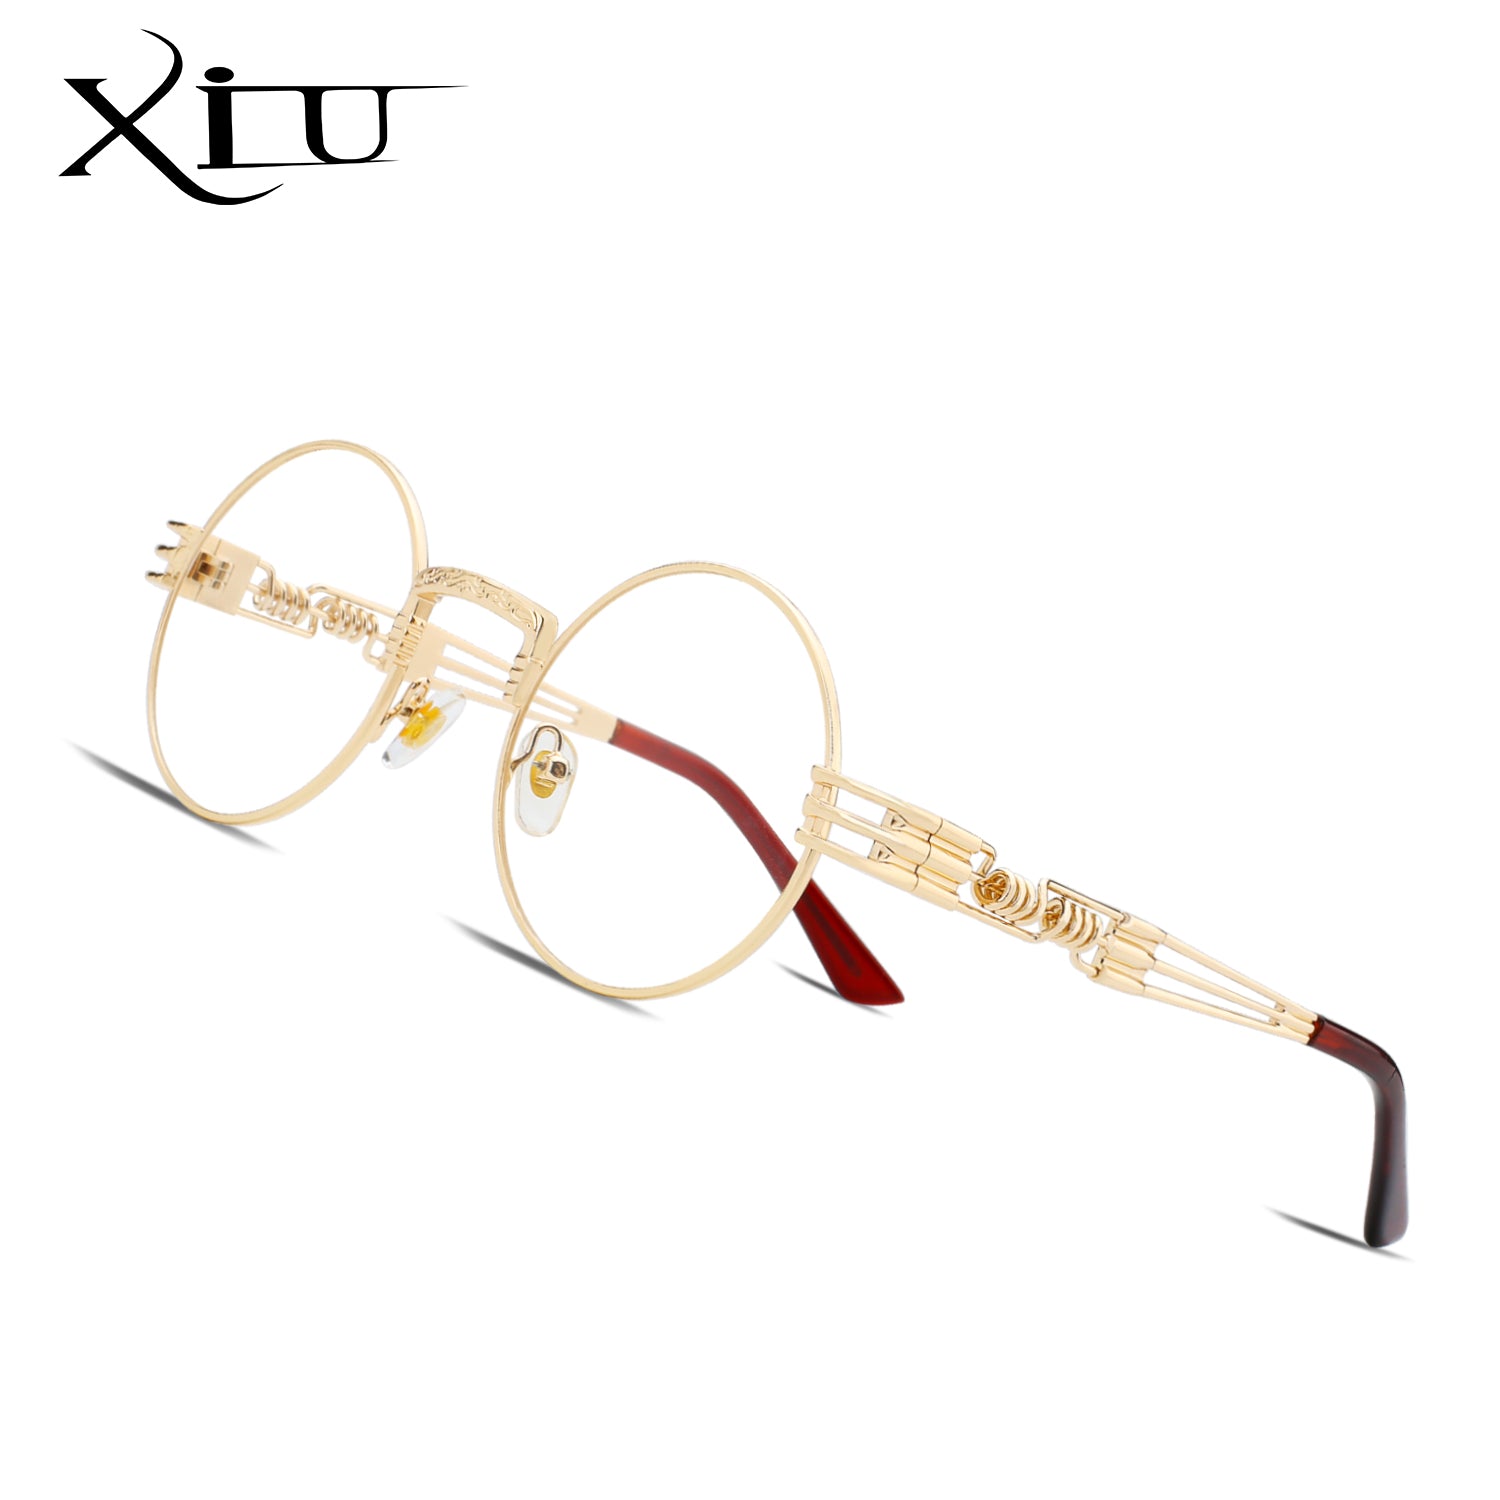 Xiu Gothic Steampunk Sunglasses Men Women Metal Wrap Eyeglasses Round Shades Brand Designer Sun Glasses Mirror High Quality